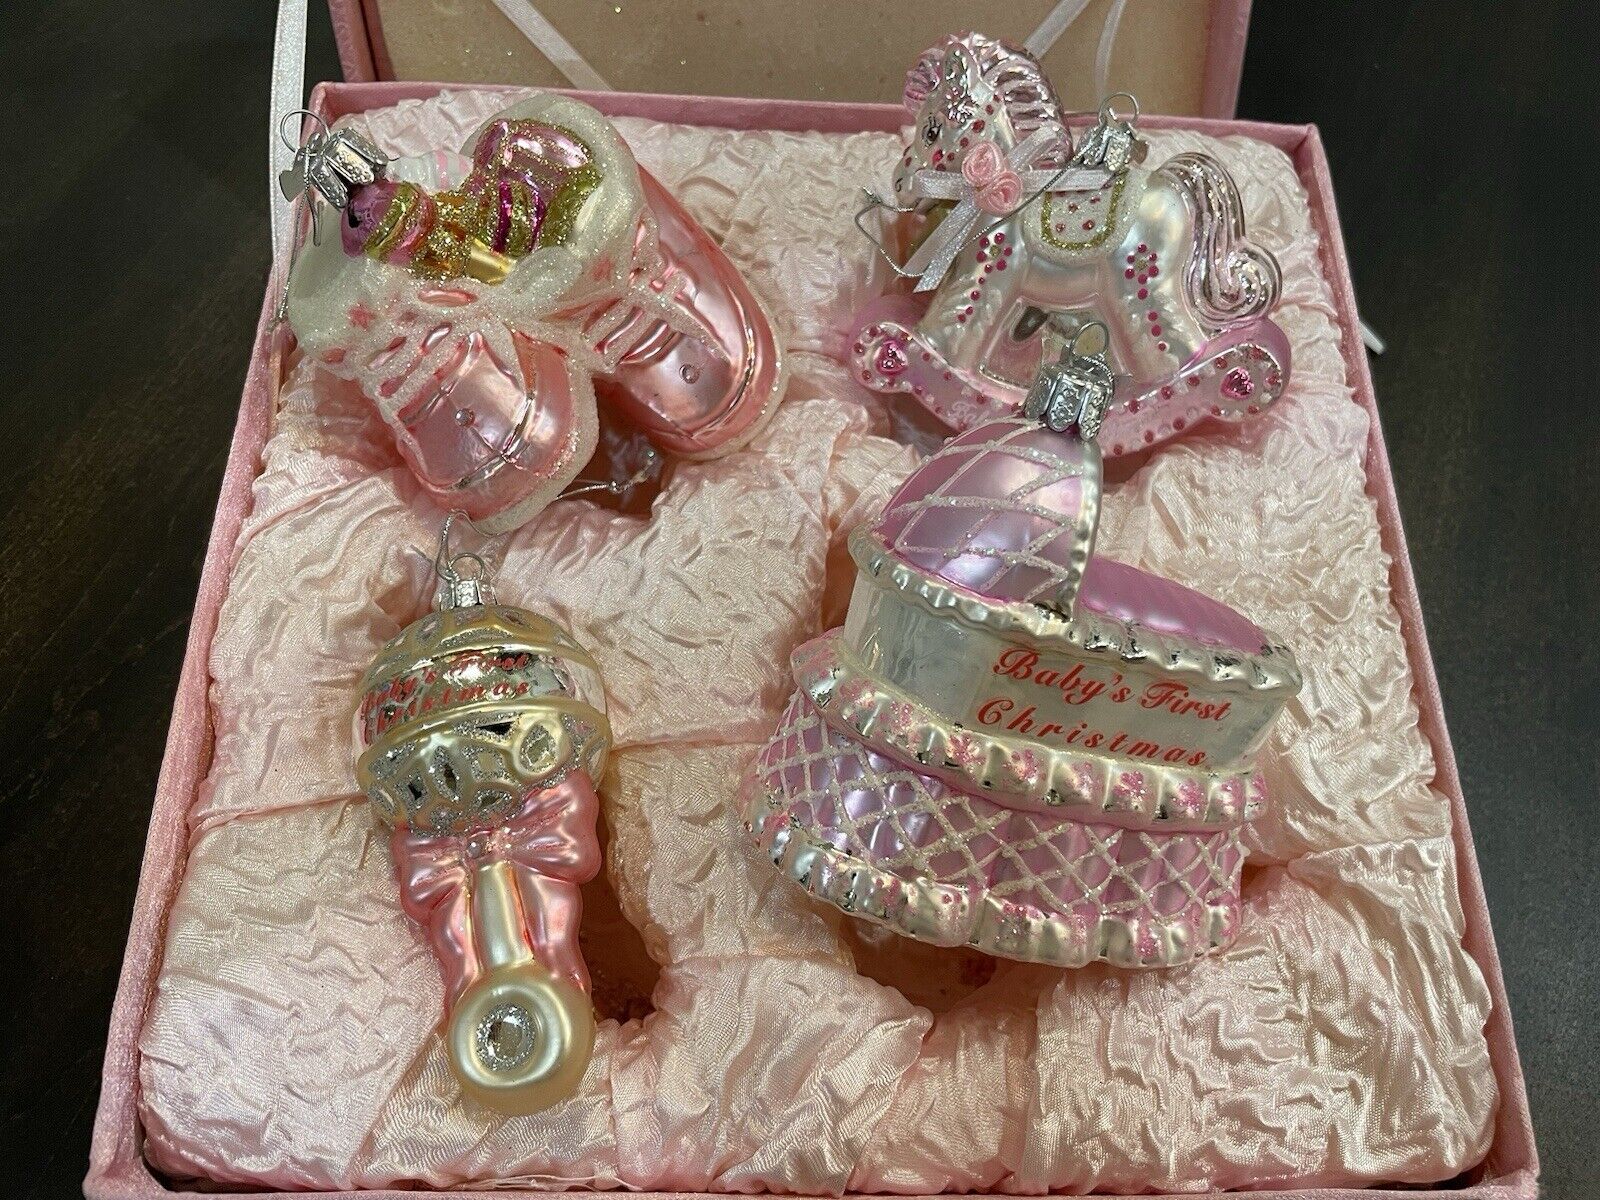 Kurt S Alder-Baby Girl First Christmas Ornaments 4pc Set Glass Boxed Keepsake 92